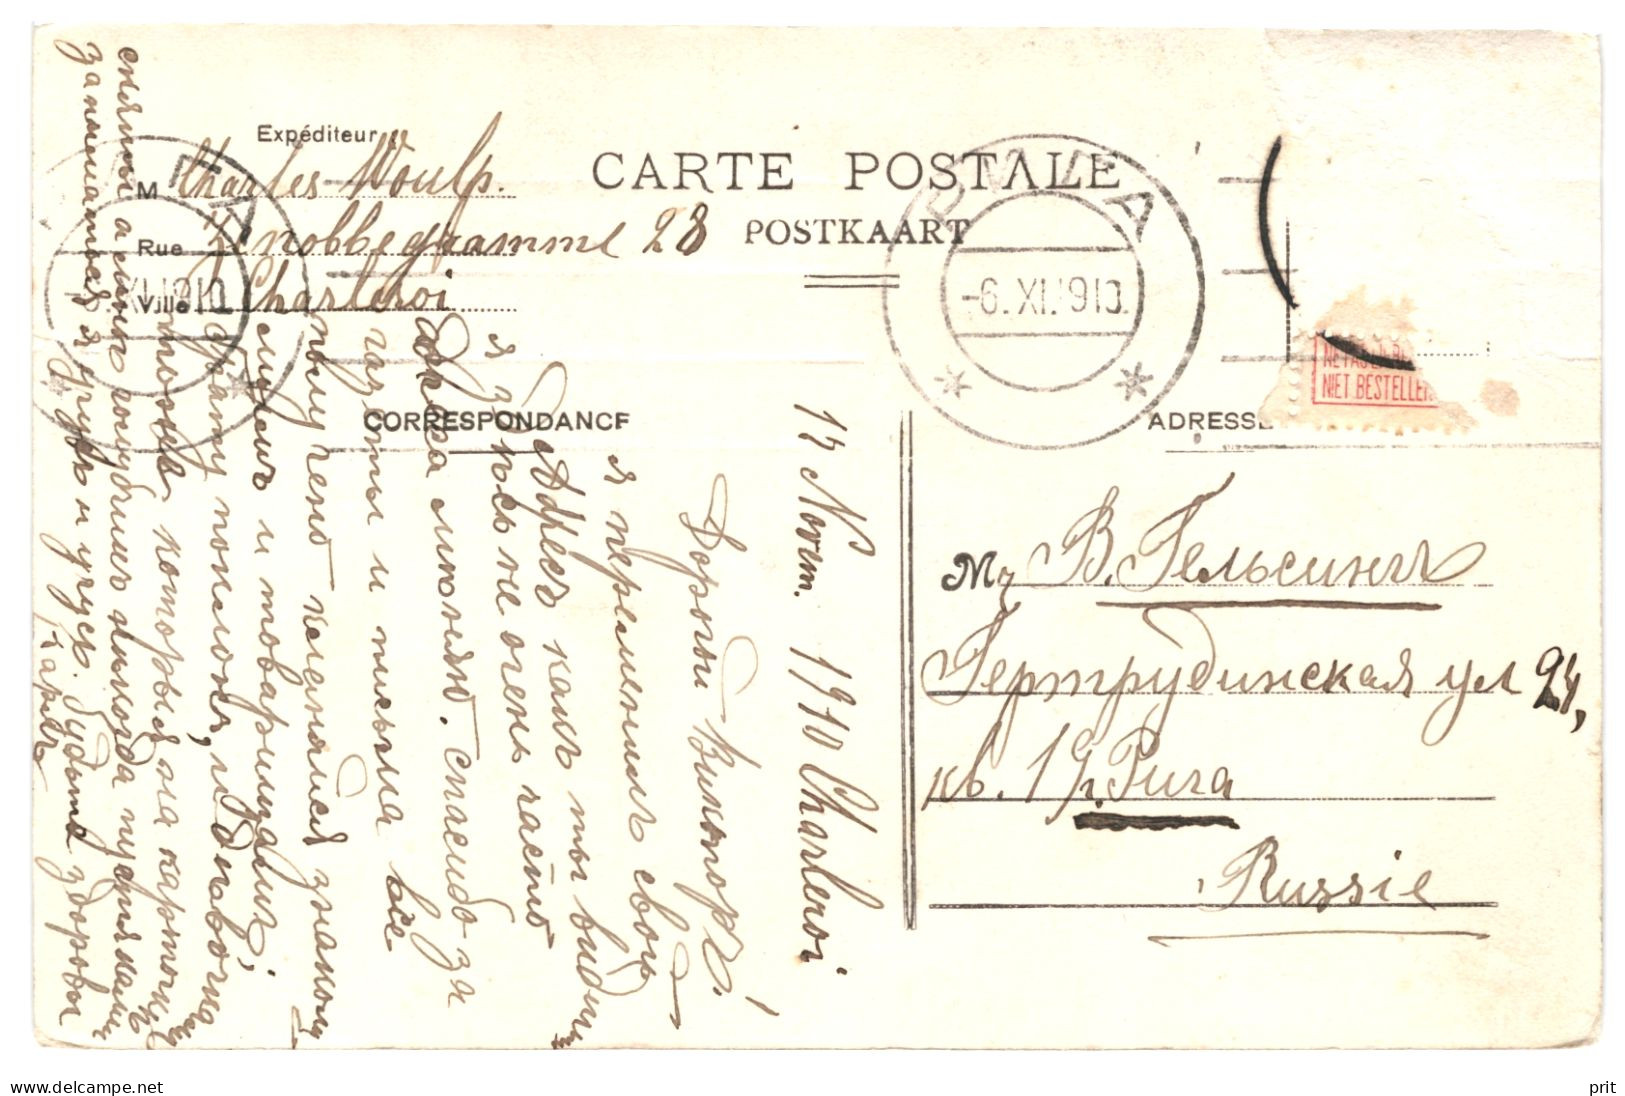 Charleroi Athénée Royal 1910 Used Real Photo Postcard Sent To Riga Latvia Imperial Russia - Charleroi